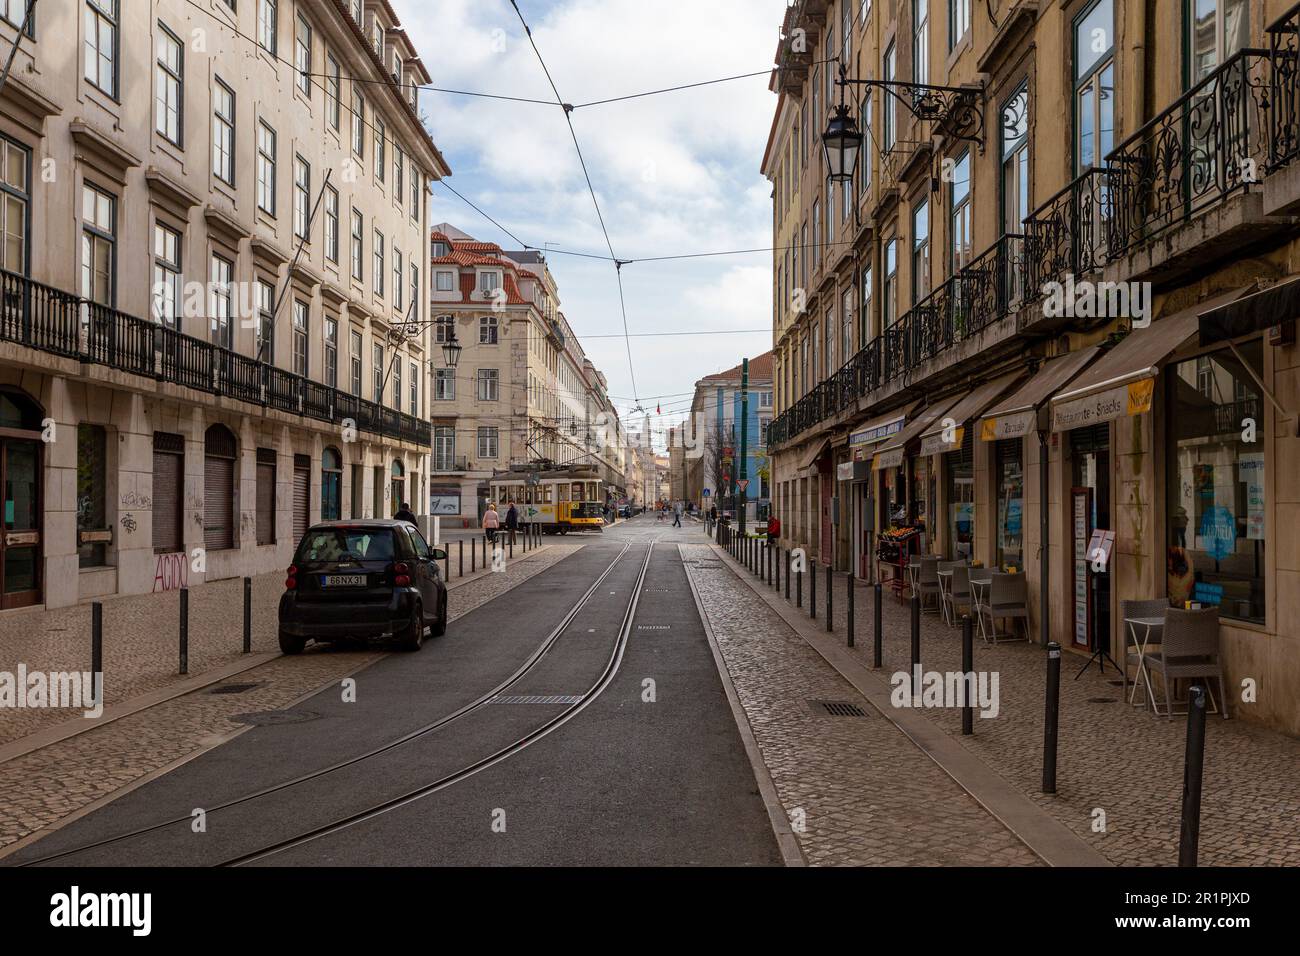 R. Bernardino Costa, Lisbon, Portugal, street scene, Tram Stock Photo